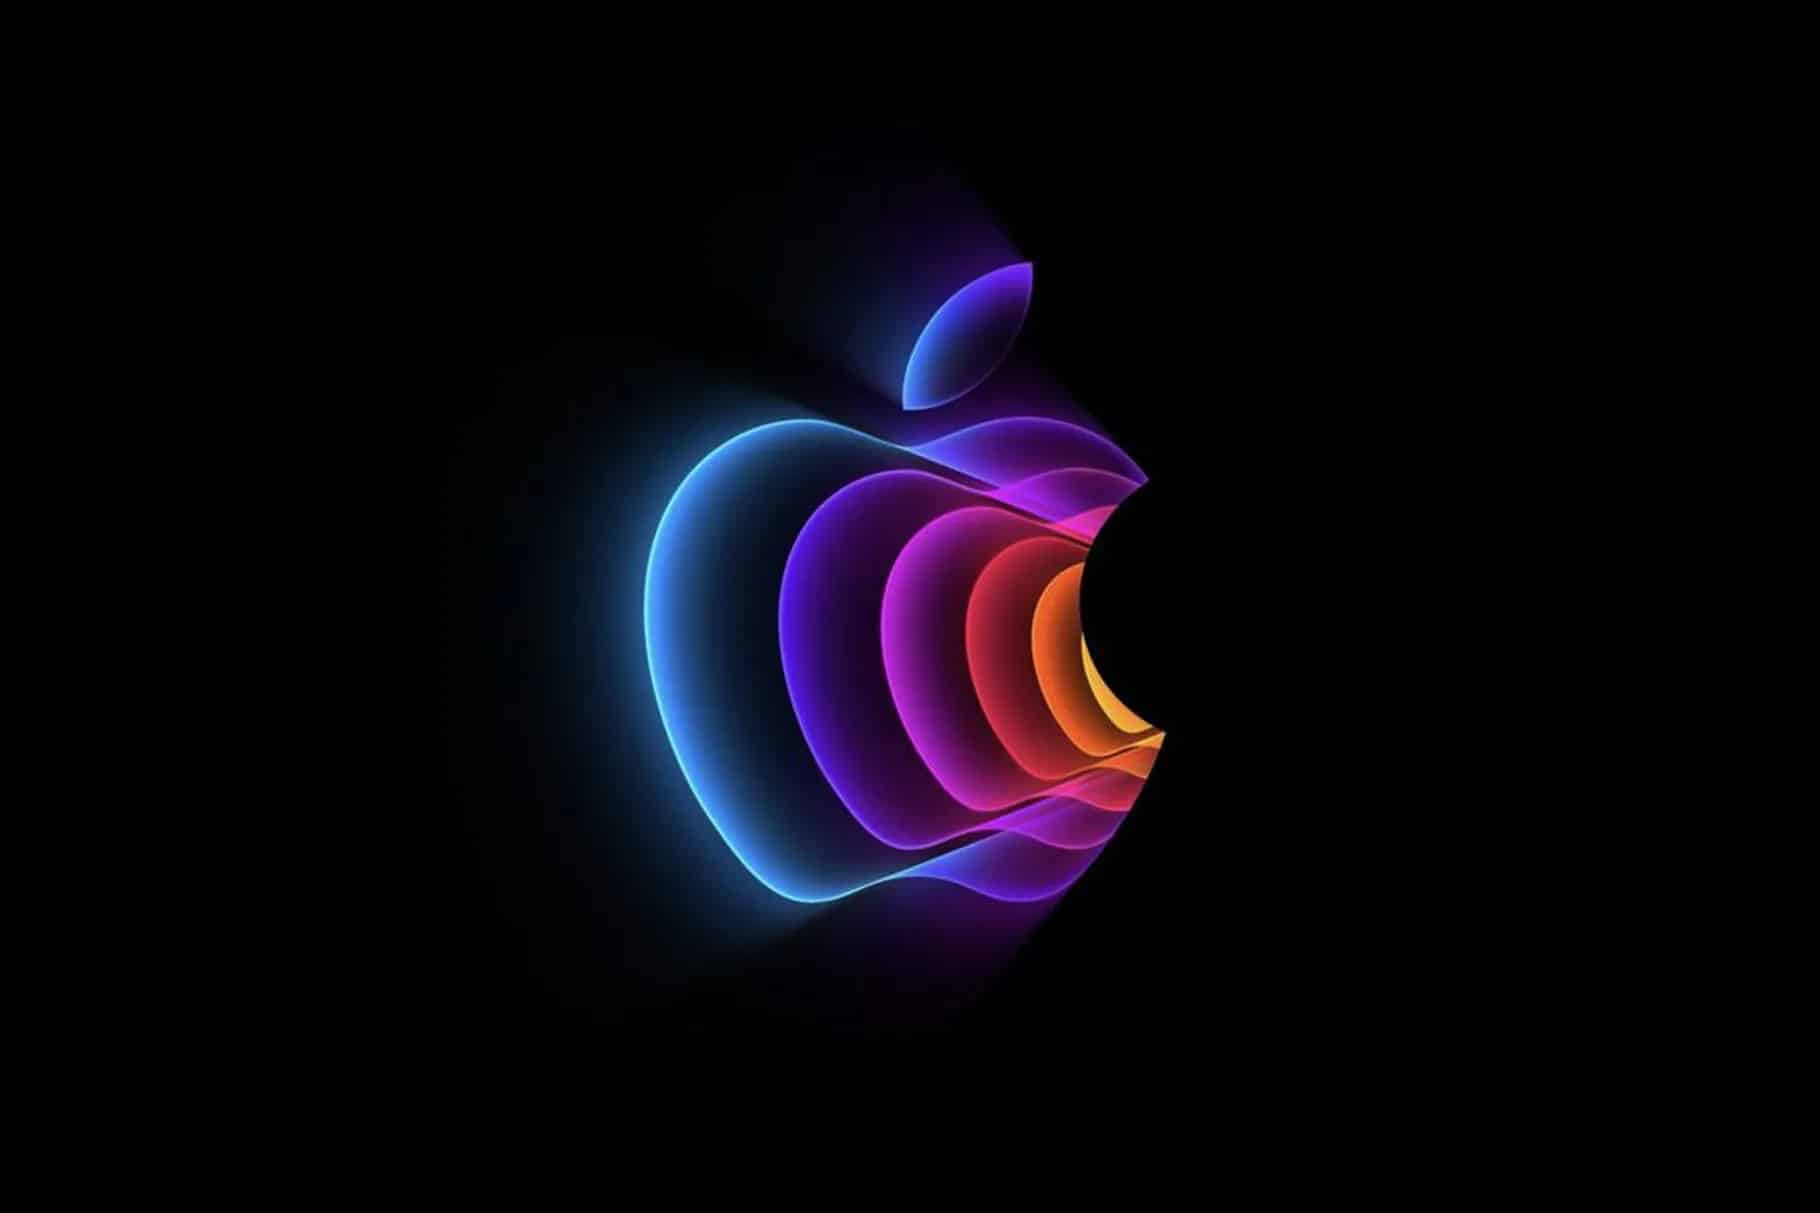 Apple Announces 8 March “Peek Performance” Event